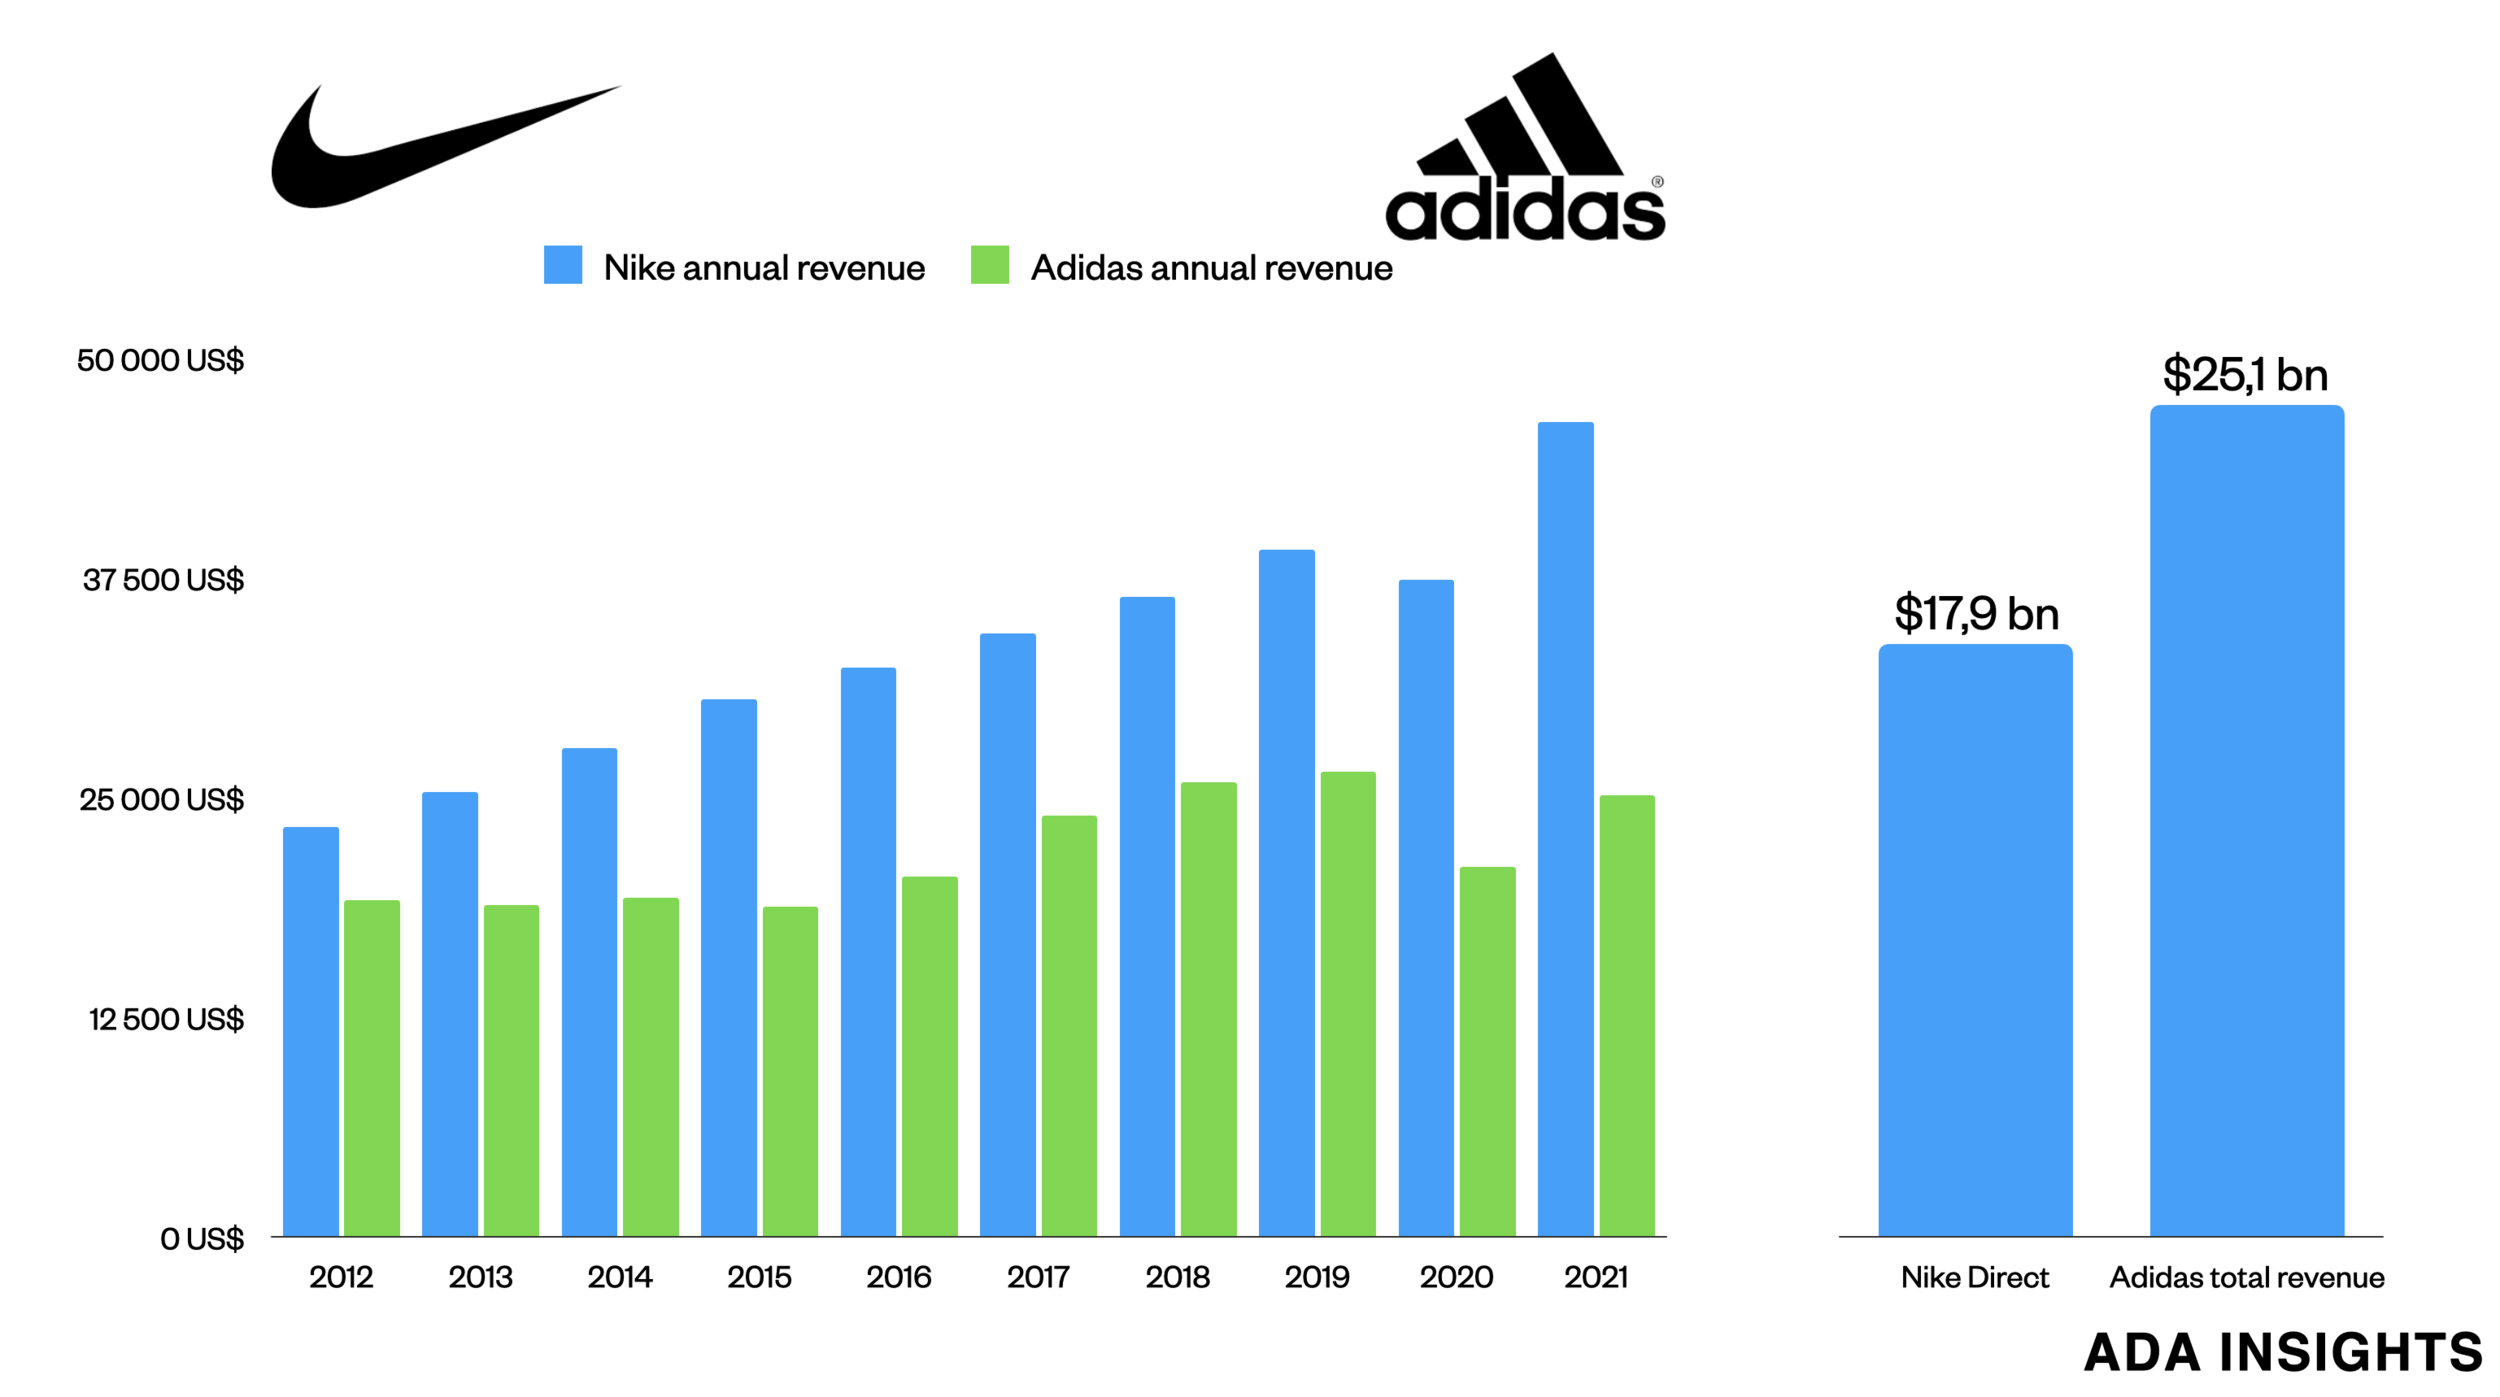 Direct already of Adidas revenue Insights